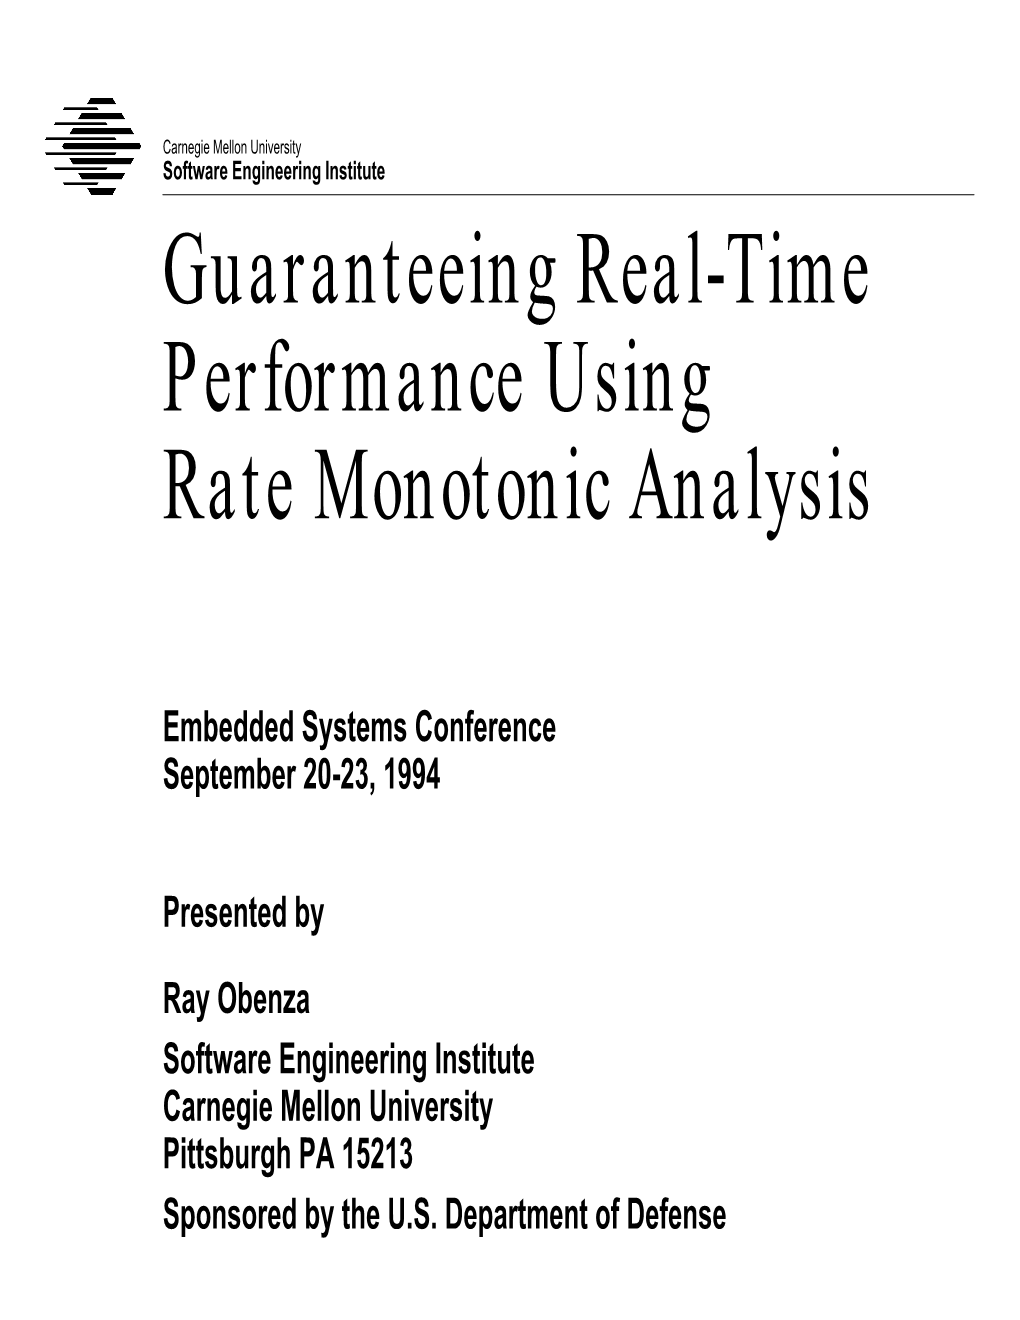 Guaranteeing Real-Time Performance Using Rate Monotonic Analysis